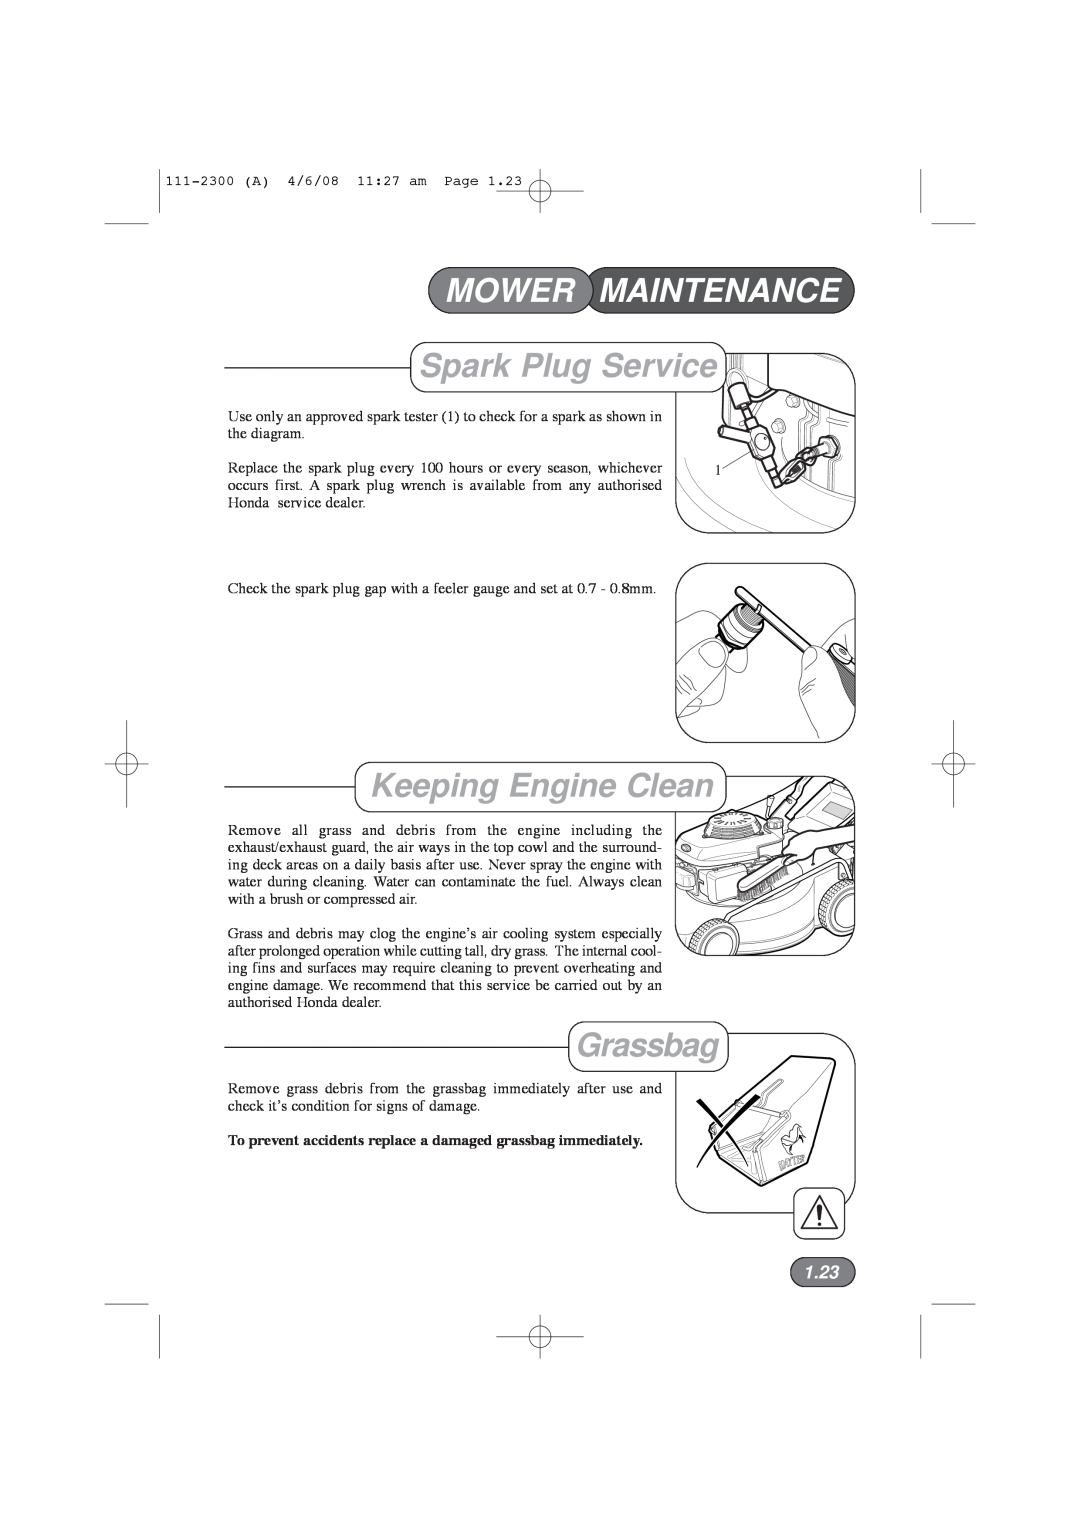 Hayter Mowers 43F manual Spark Plug Service, Keeping Engine Clean, 1.23, Mower Maintenance, Grassbag 